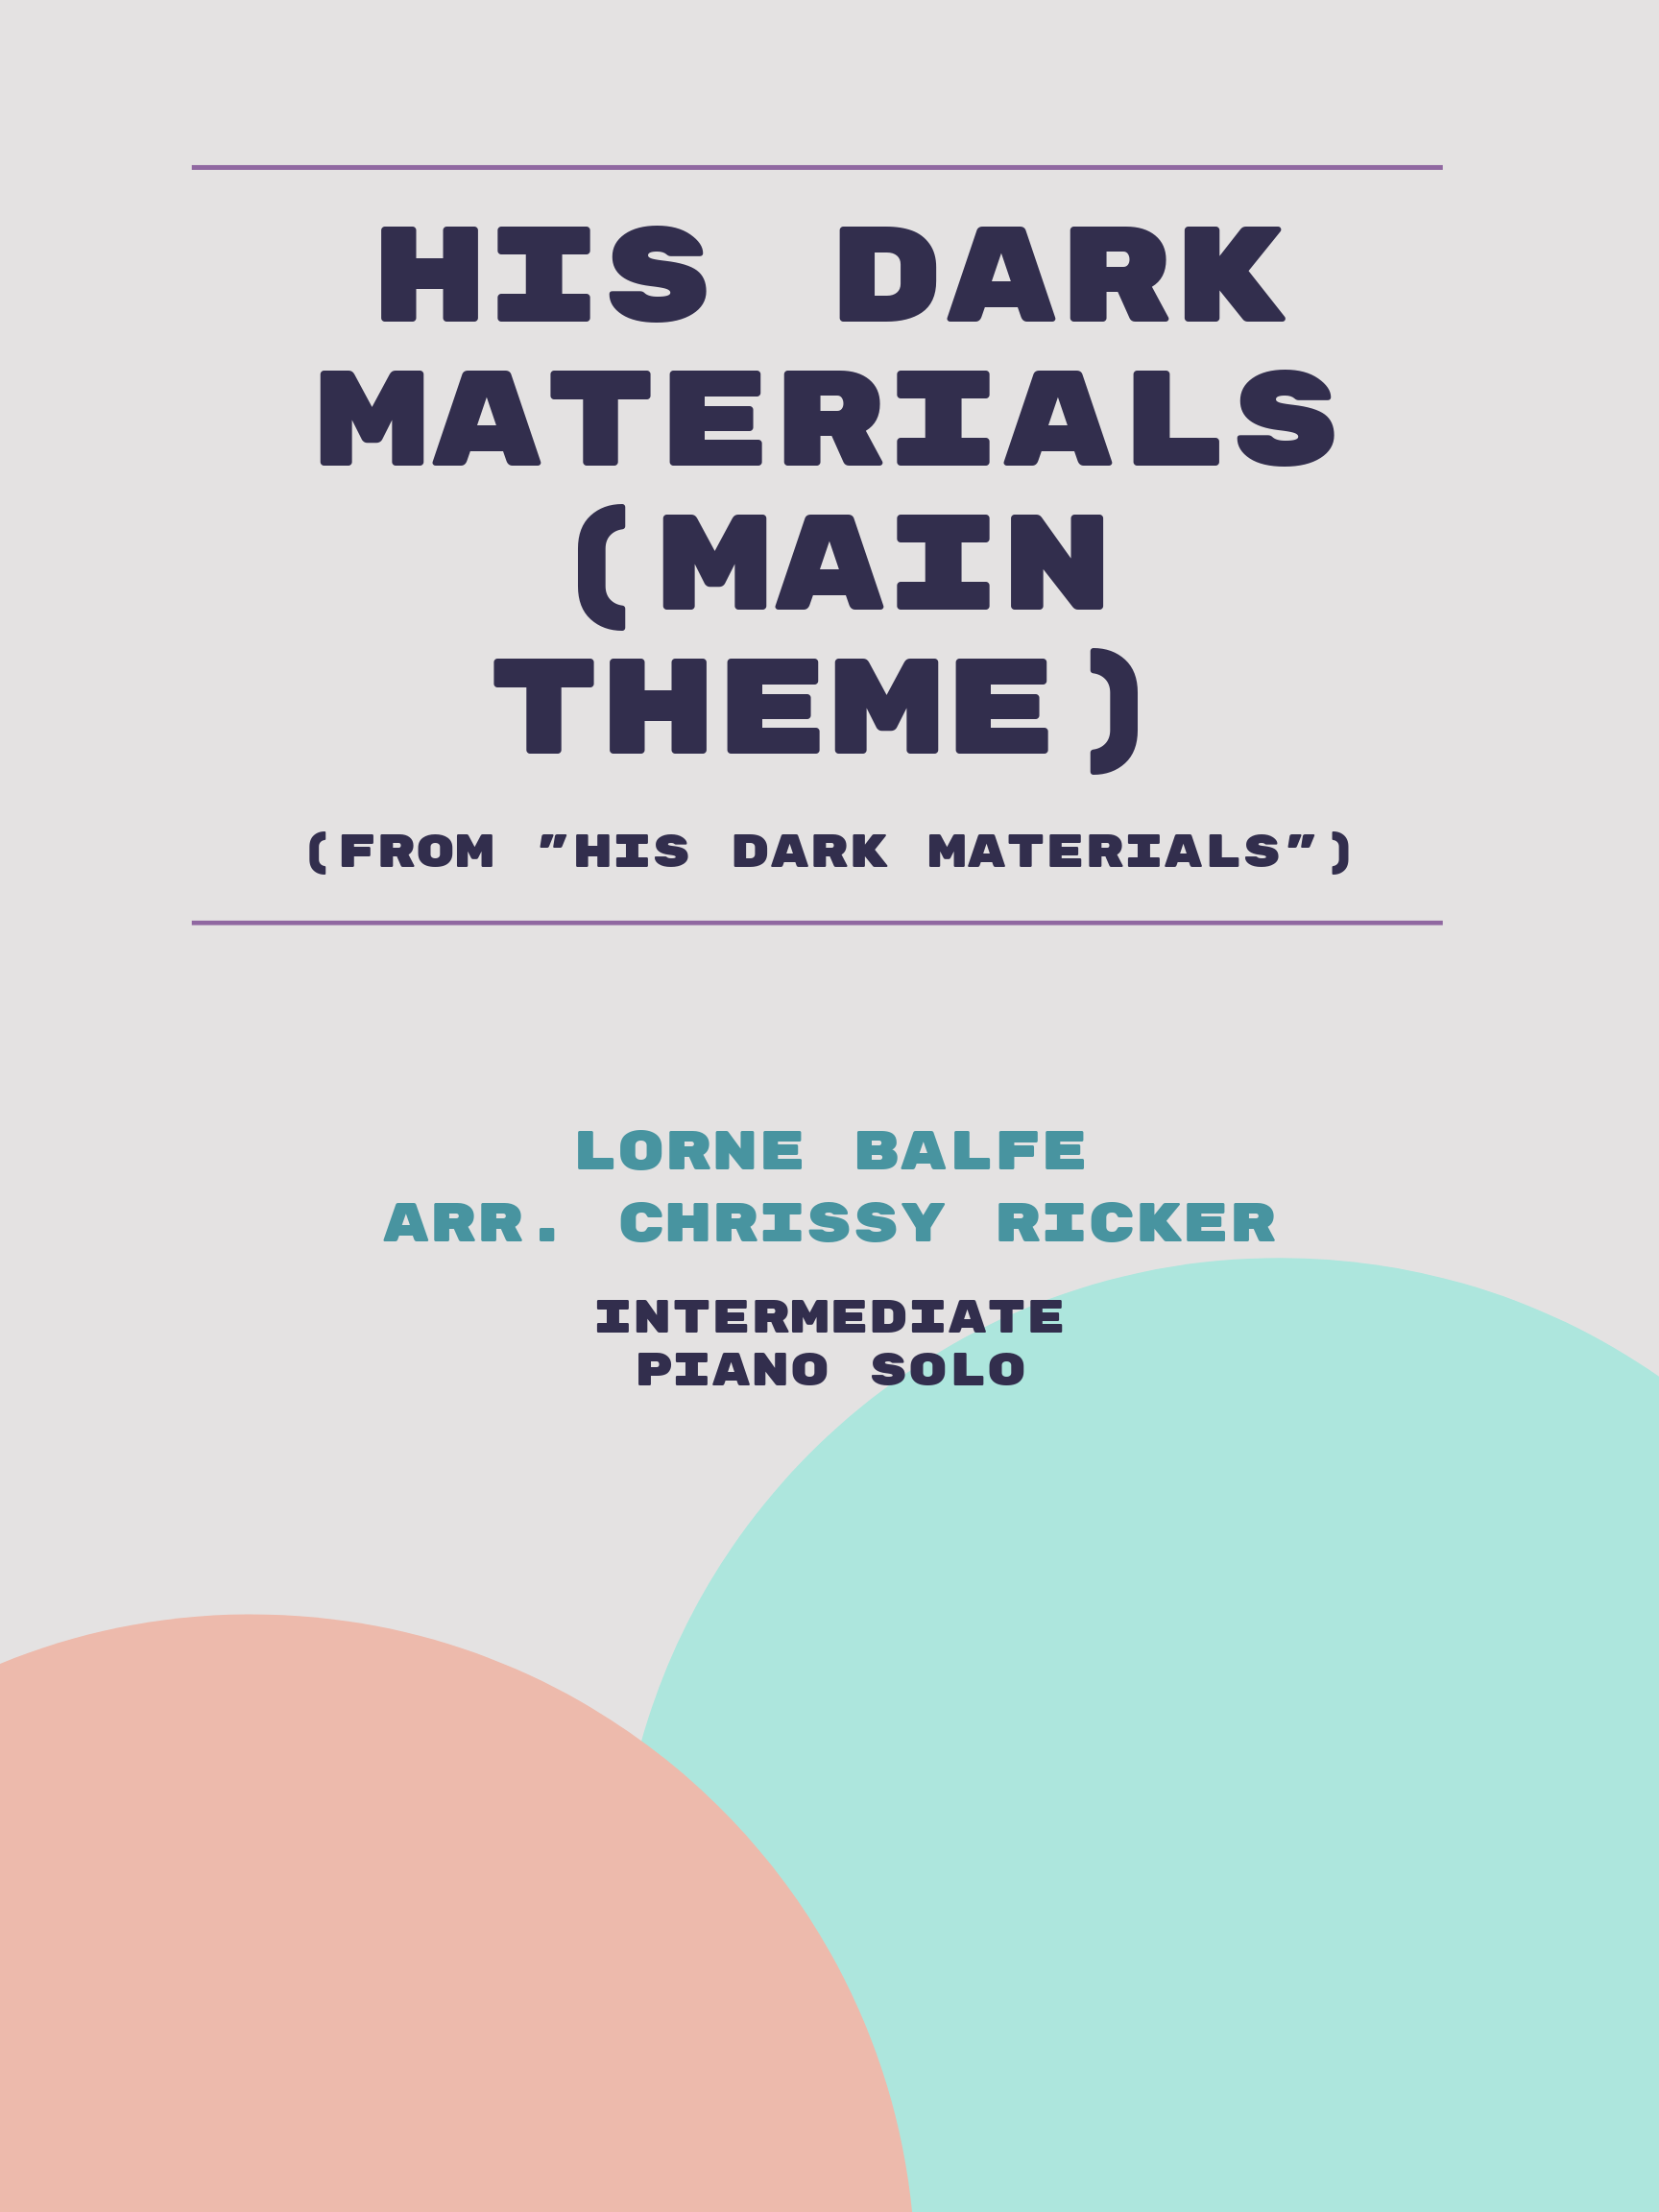 His Dark Materials (Main Theme) by Lorne Balfe